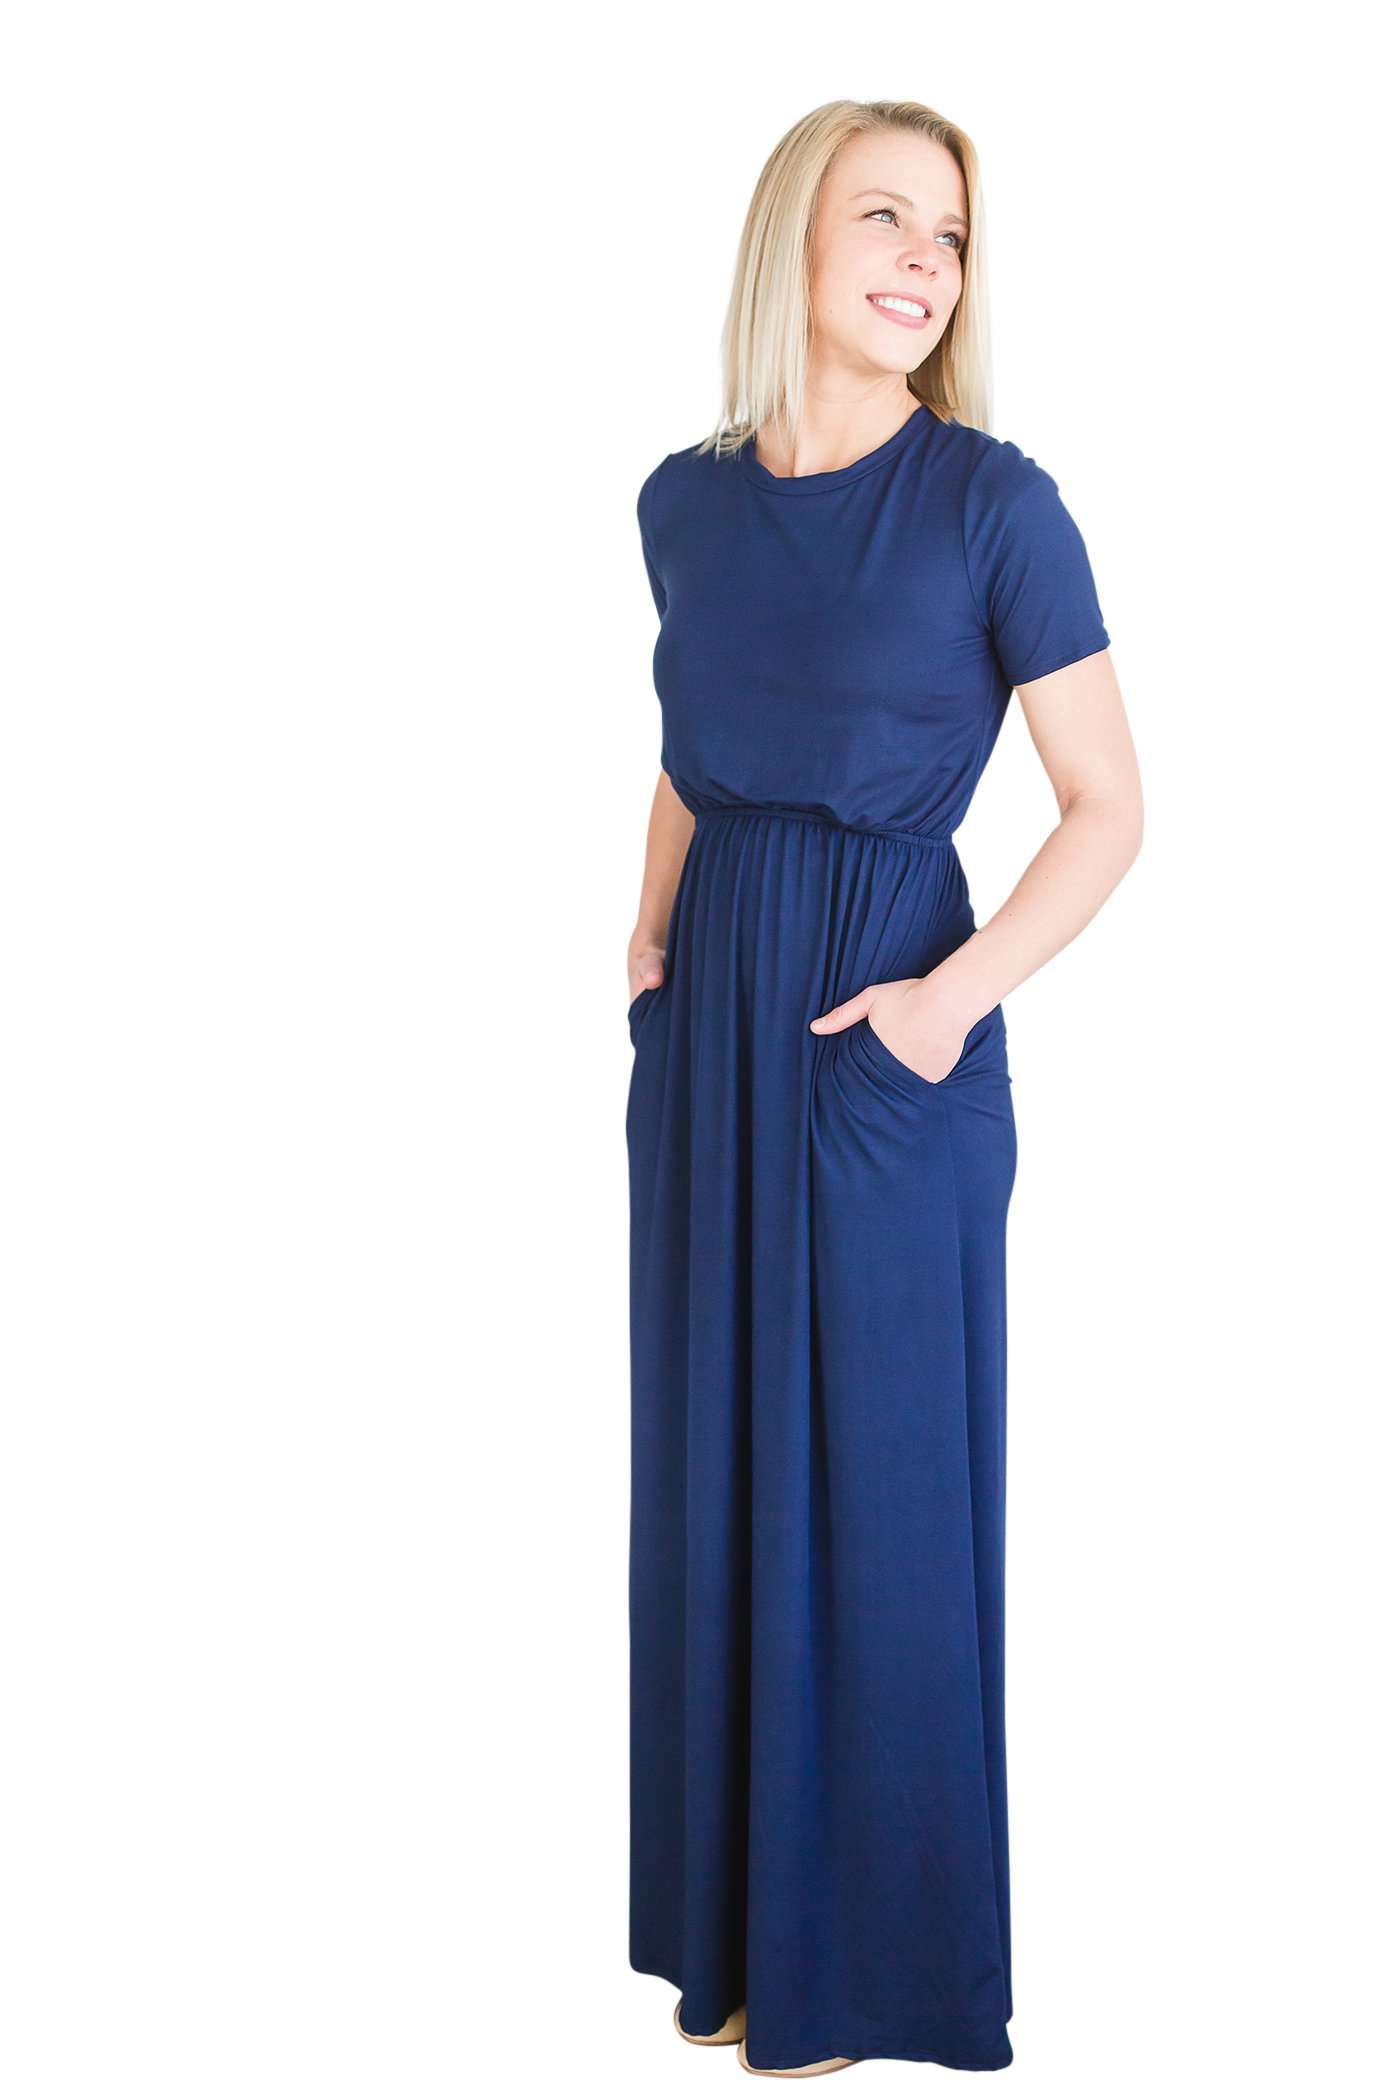 Modest women's maxi dress in peach, navy or black. 2 hidden side seam pockets, elastic waist and short sleeves.